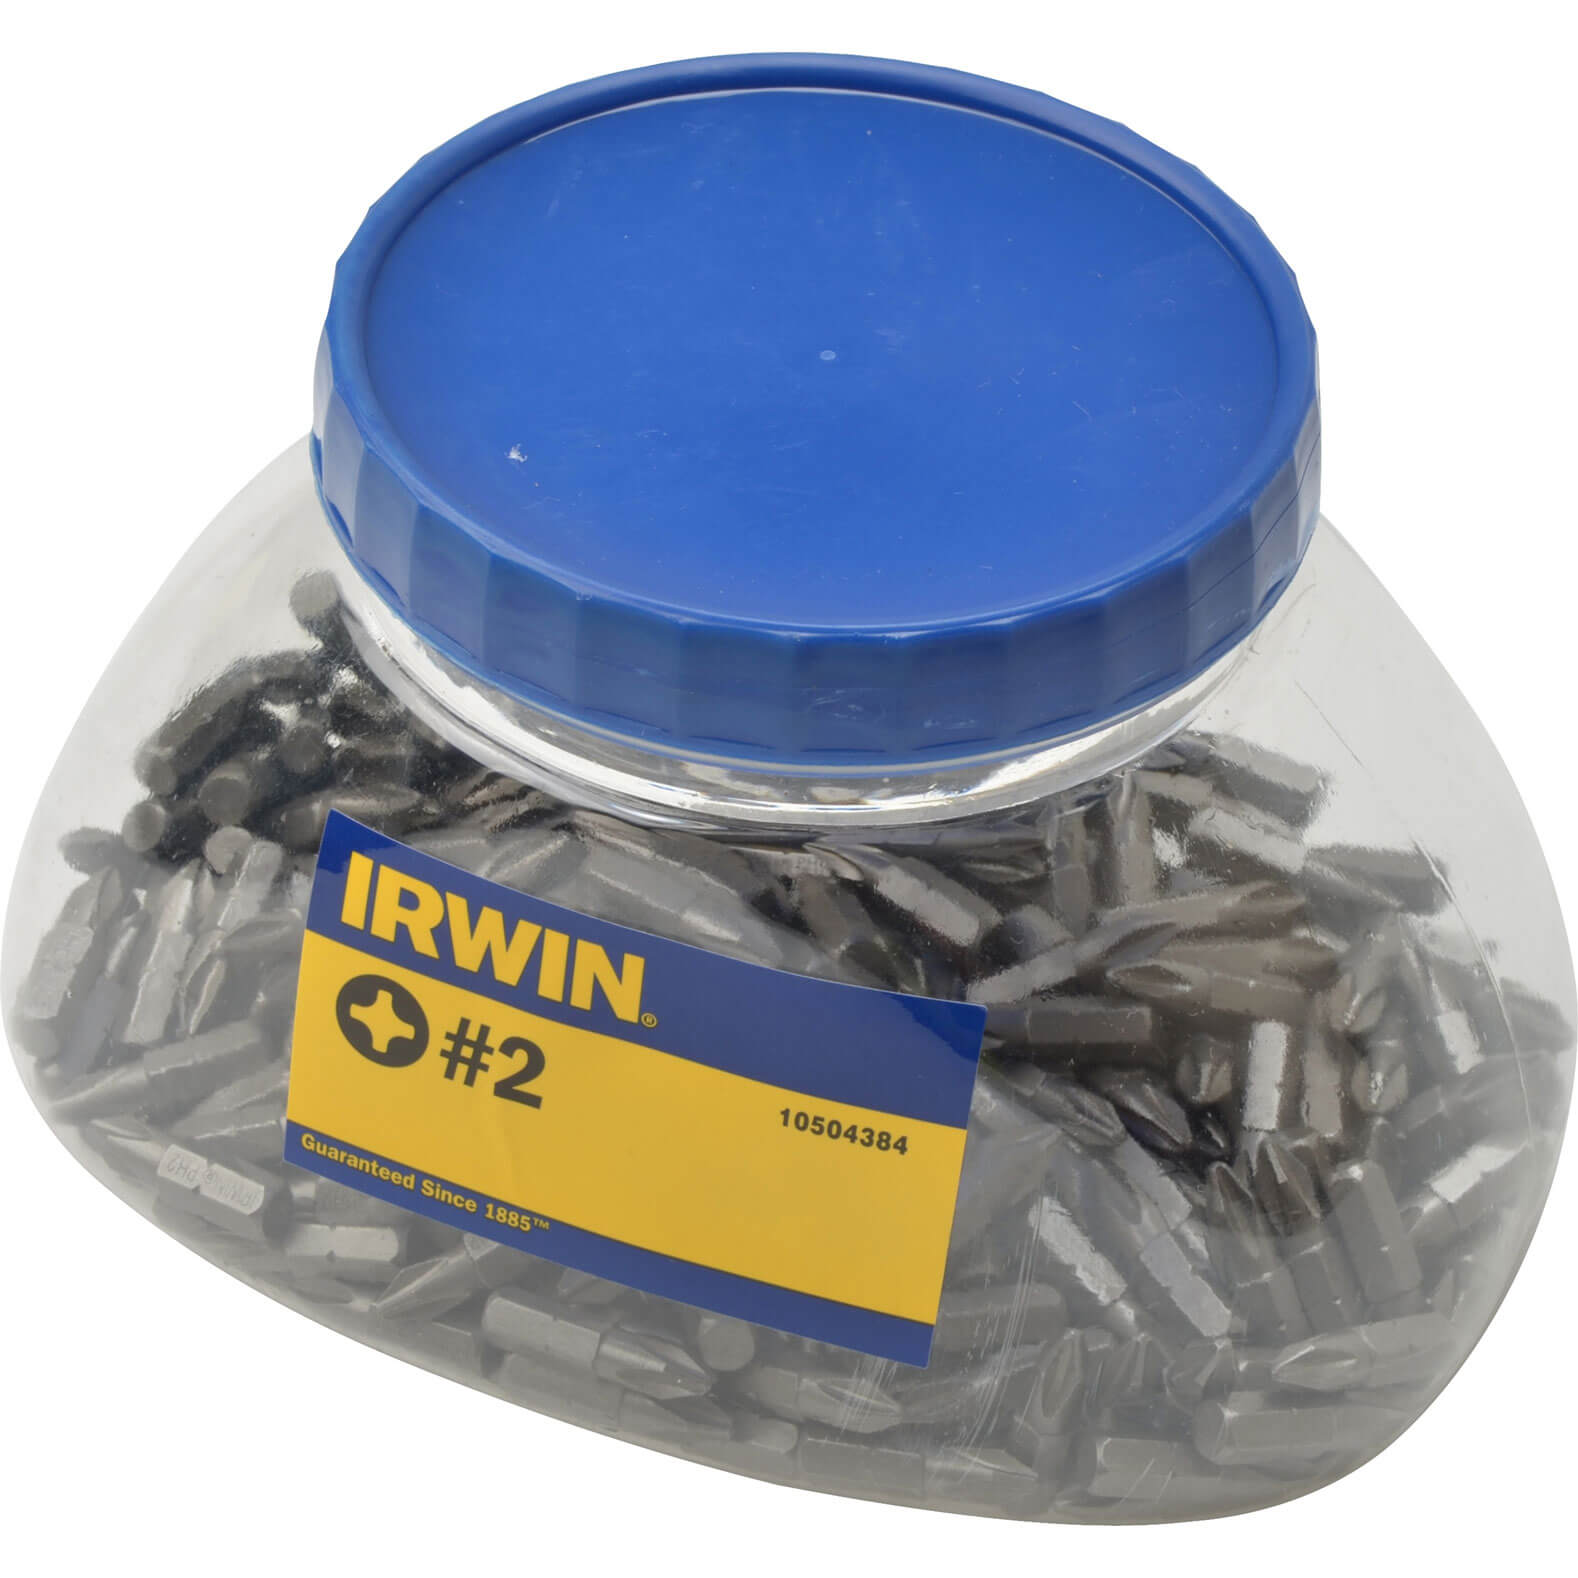 Image of Irwin PH2 Phillips Screwdriver Bits Jar of 250 PH2 25mm Pack of 250